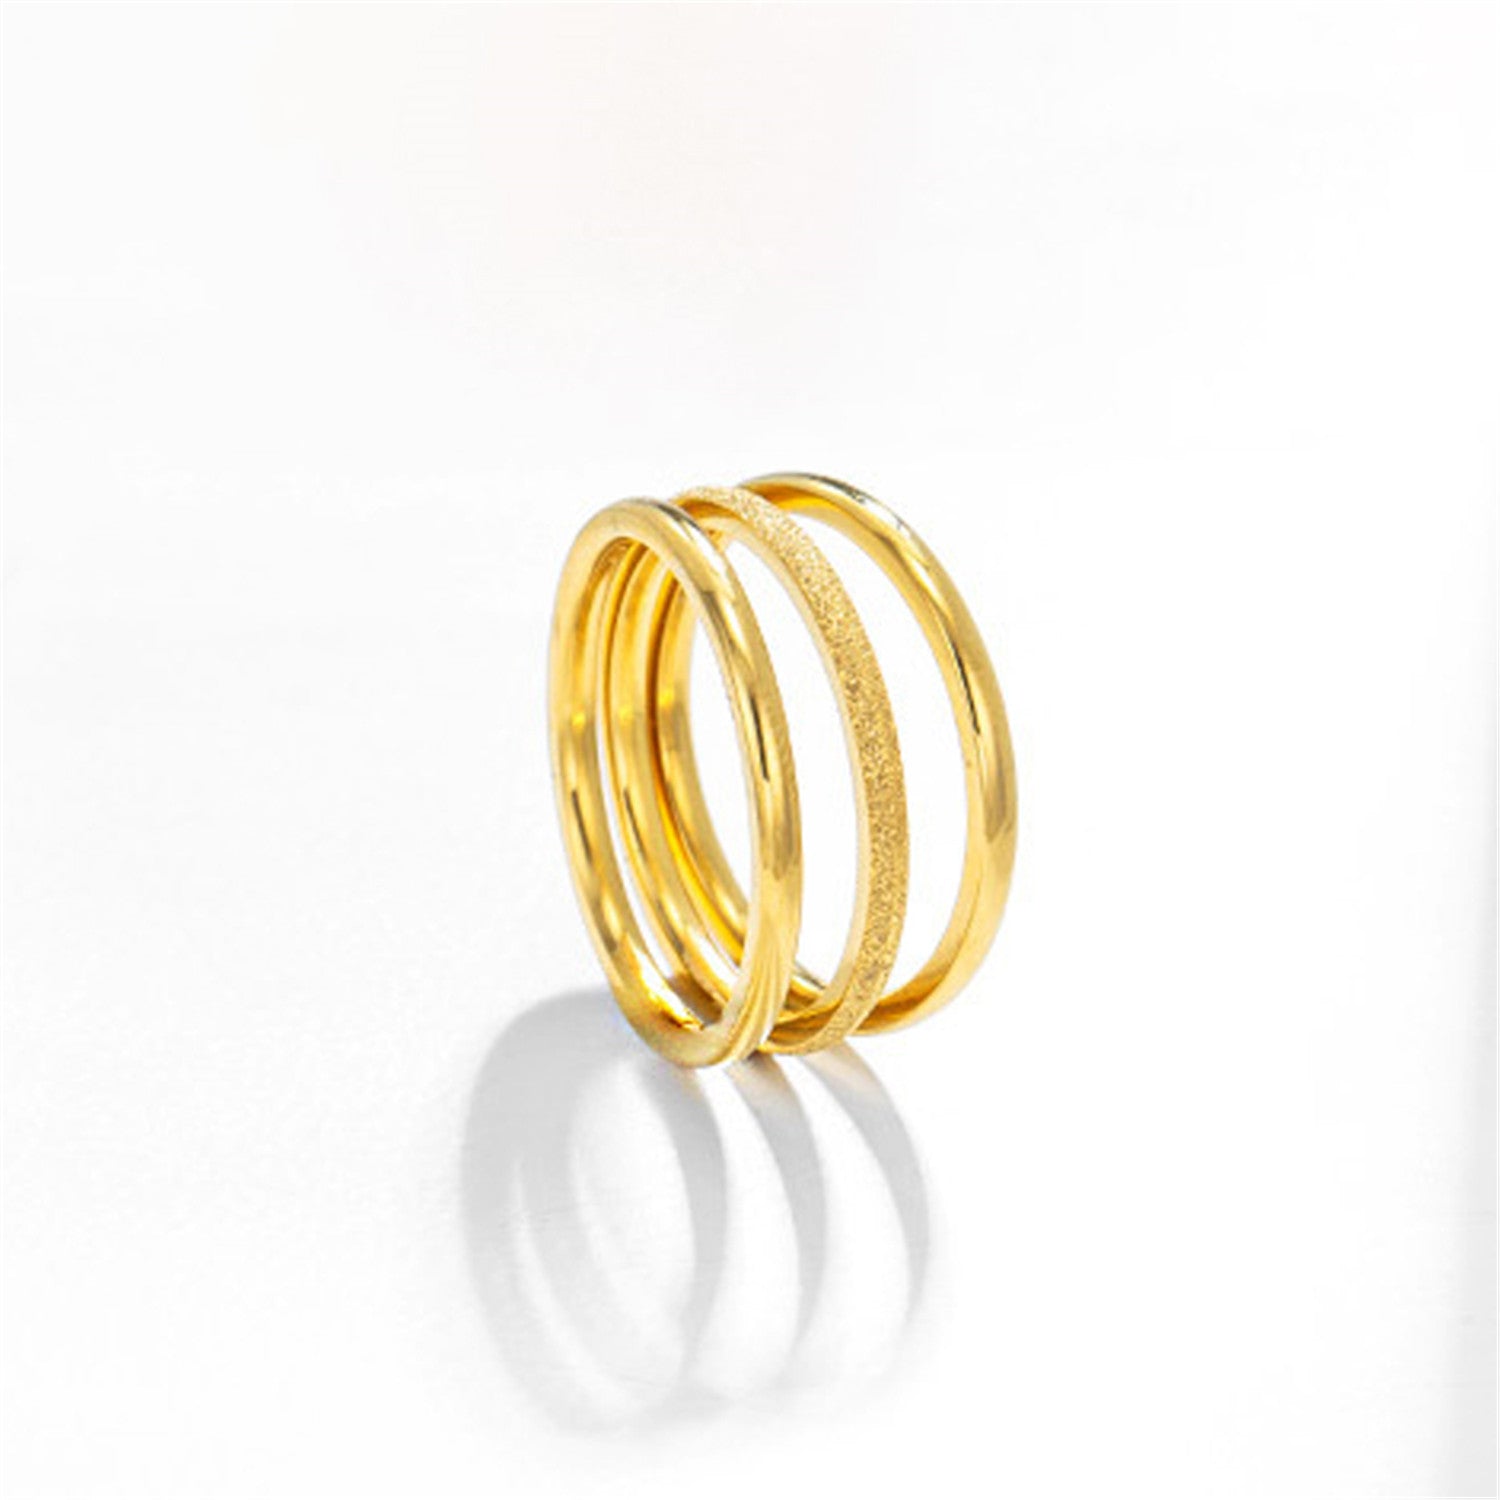 23K Gold Plated Titanium Steel Ring Set,Modern Stylish